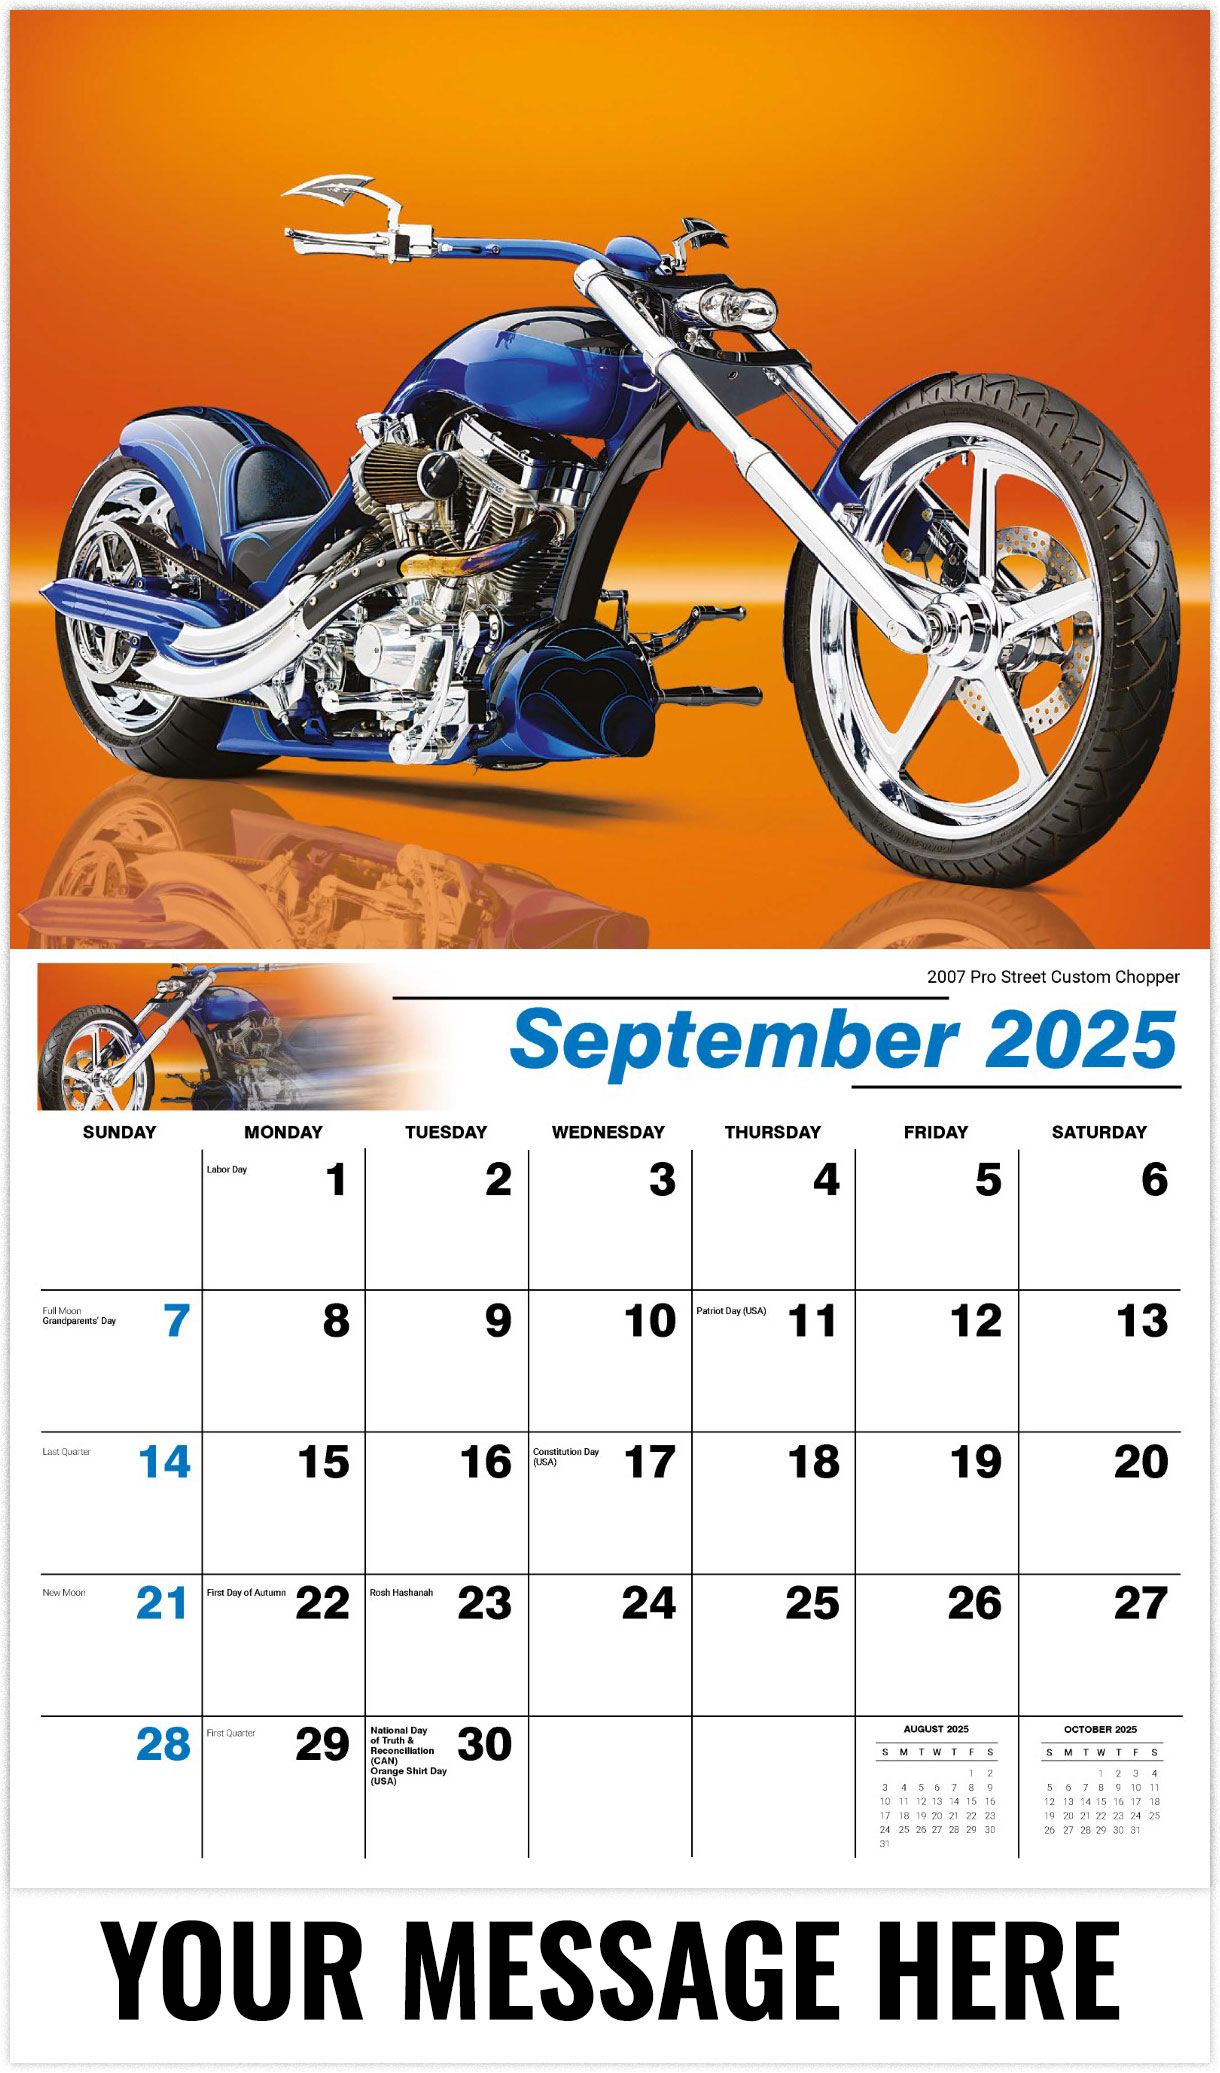 Galleria Motorcycle Mania - 2025